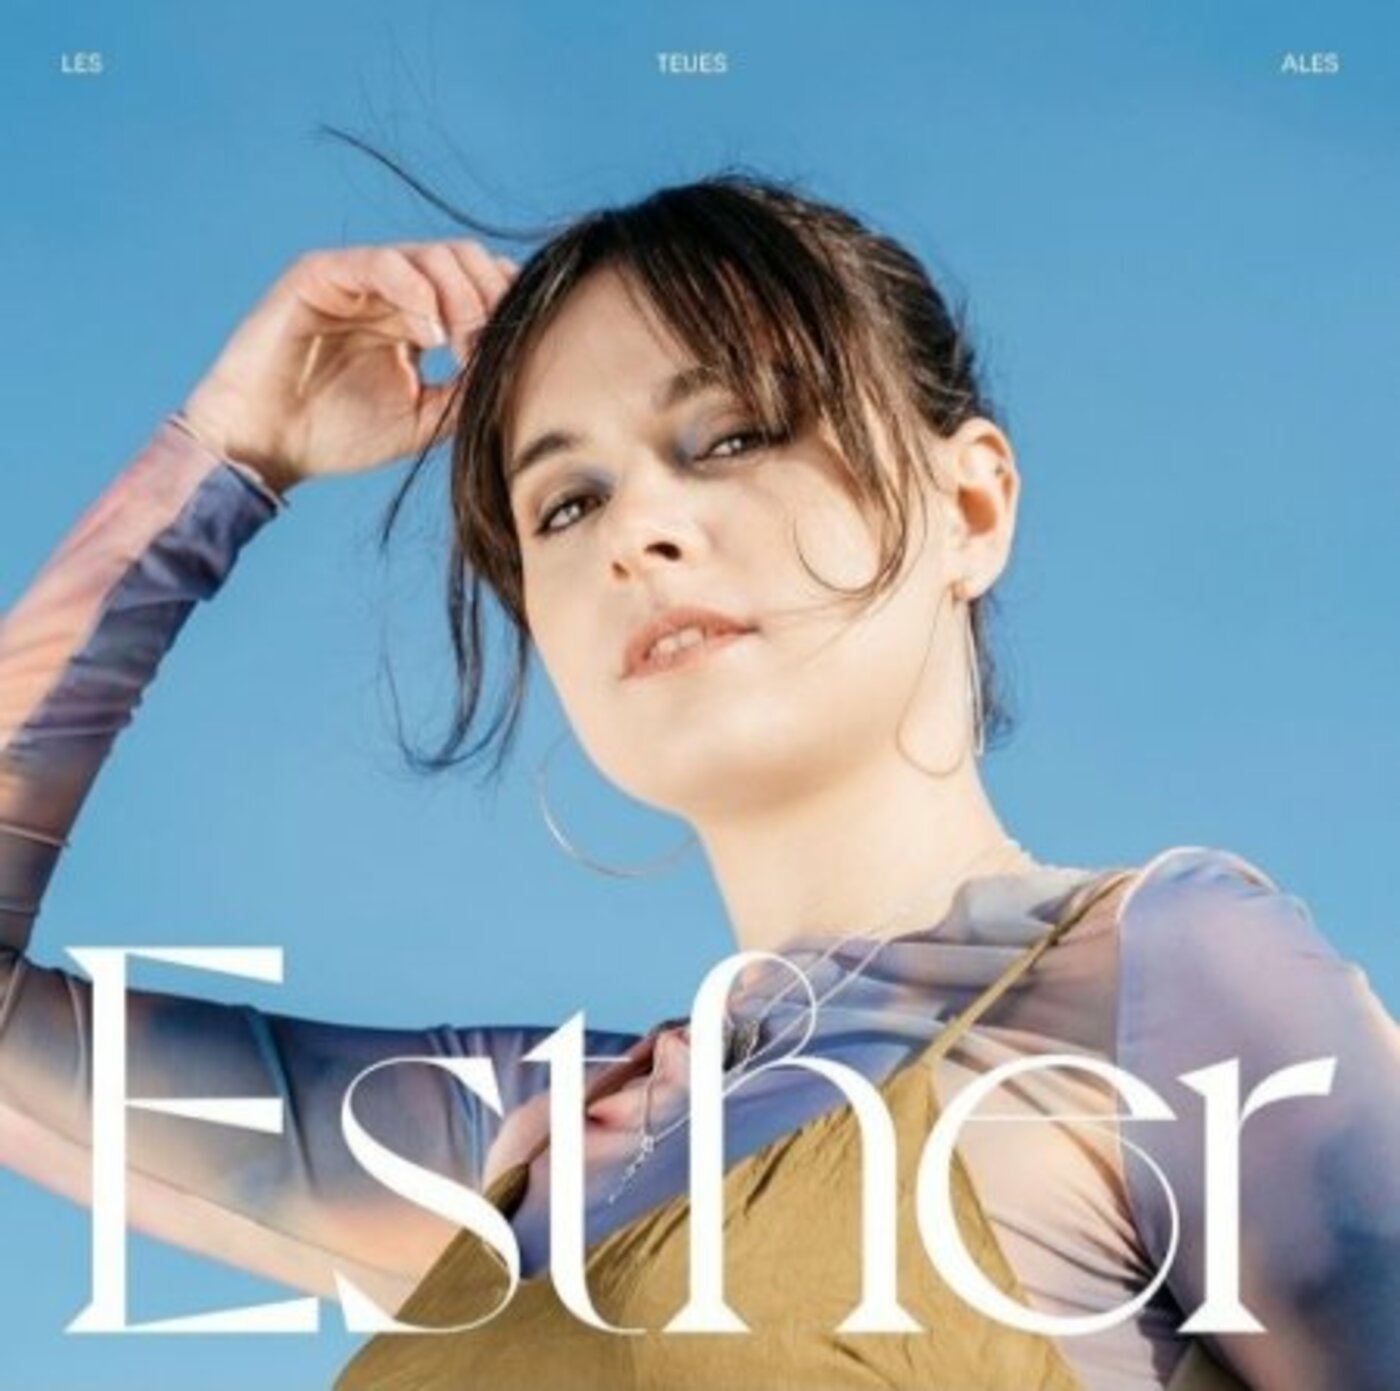 Esther - Les teues ales | musica en valencià